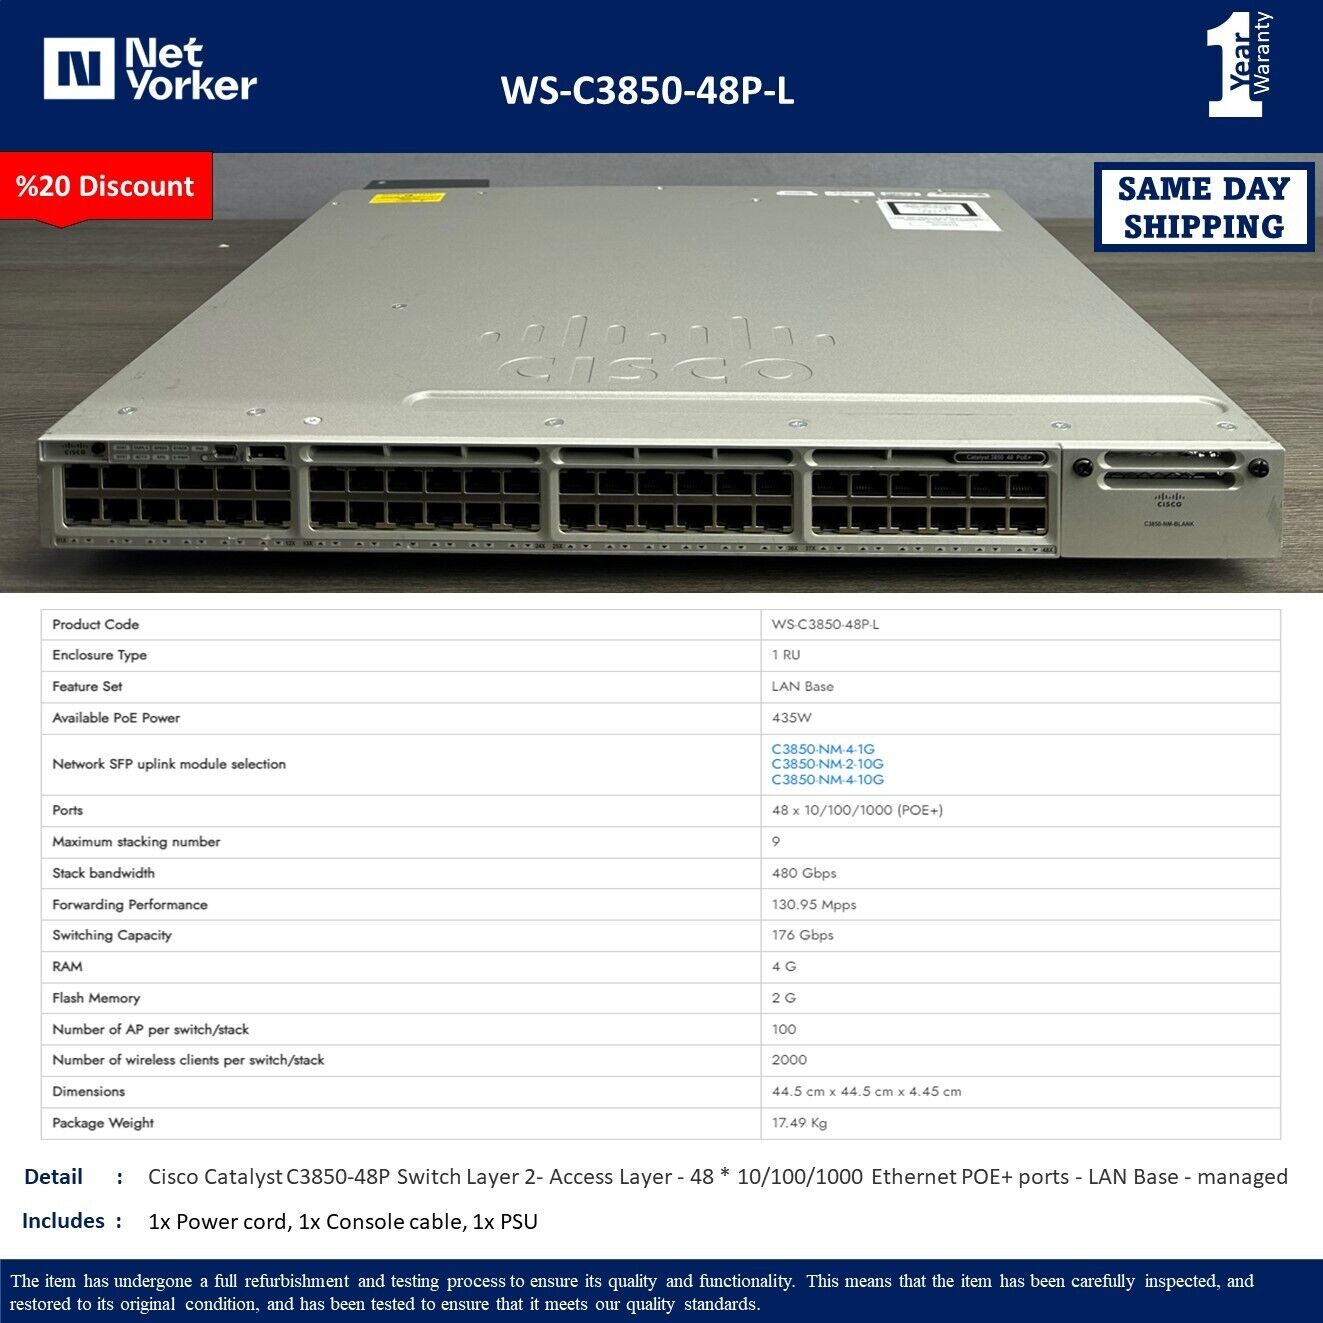 Cisco WS-C3850-48P-L 48 Port Gigabit PoE+ Switch / - Same day shipping